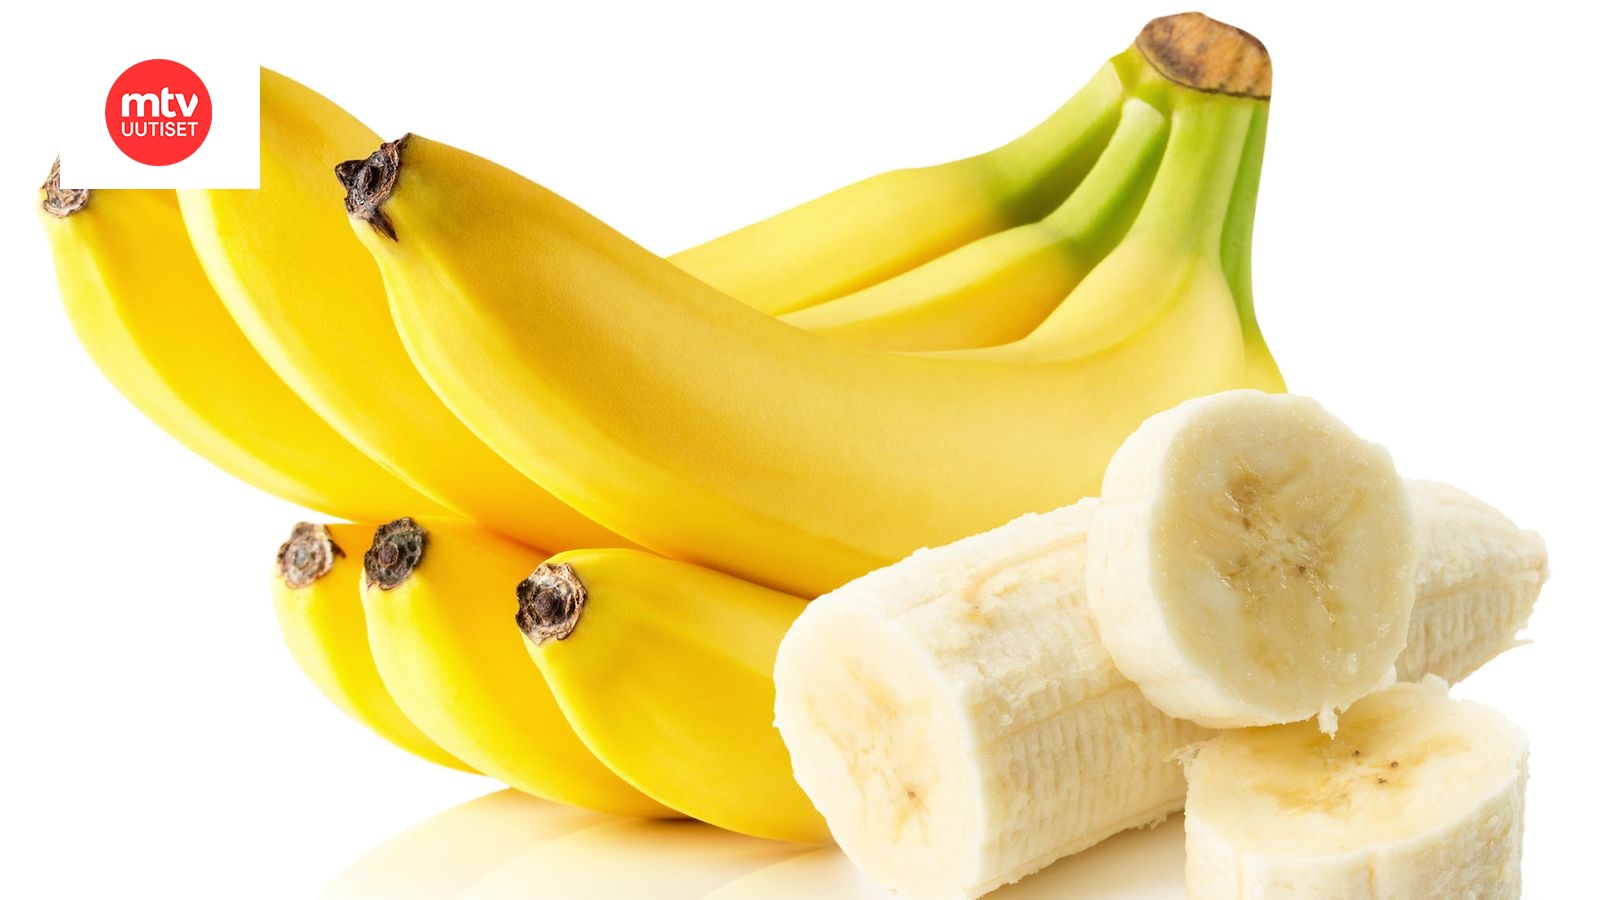 banaani tauti